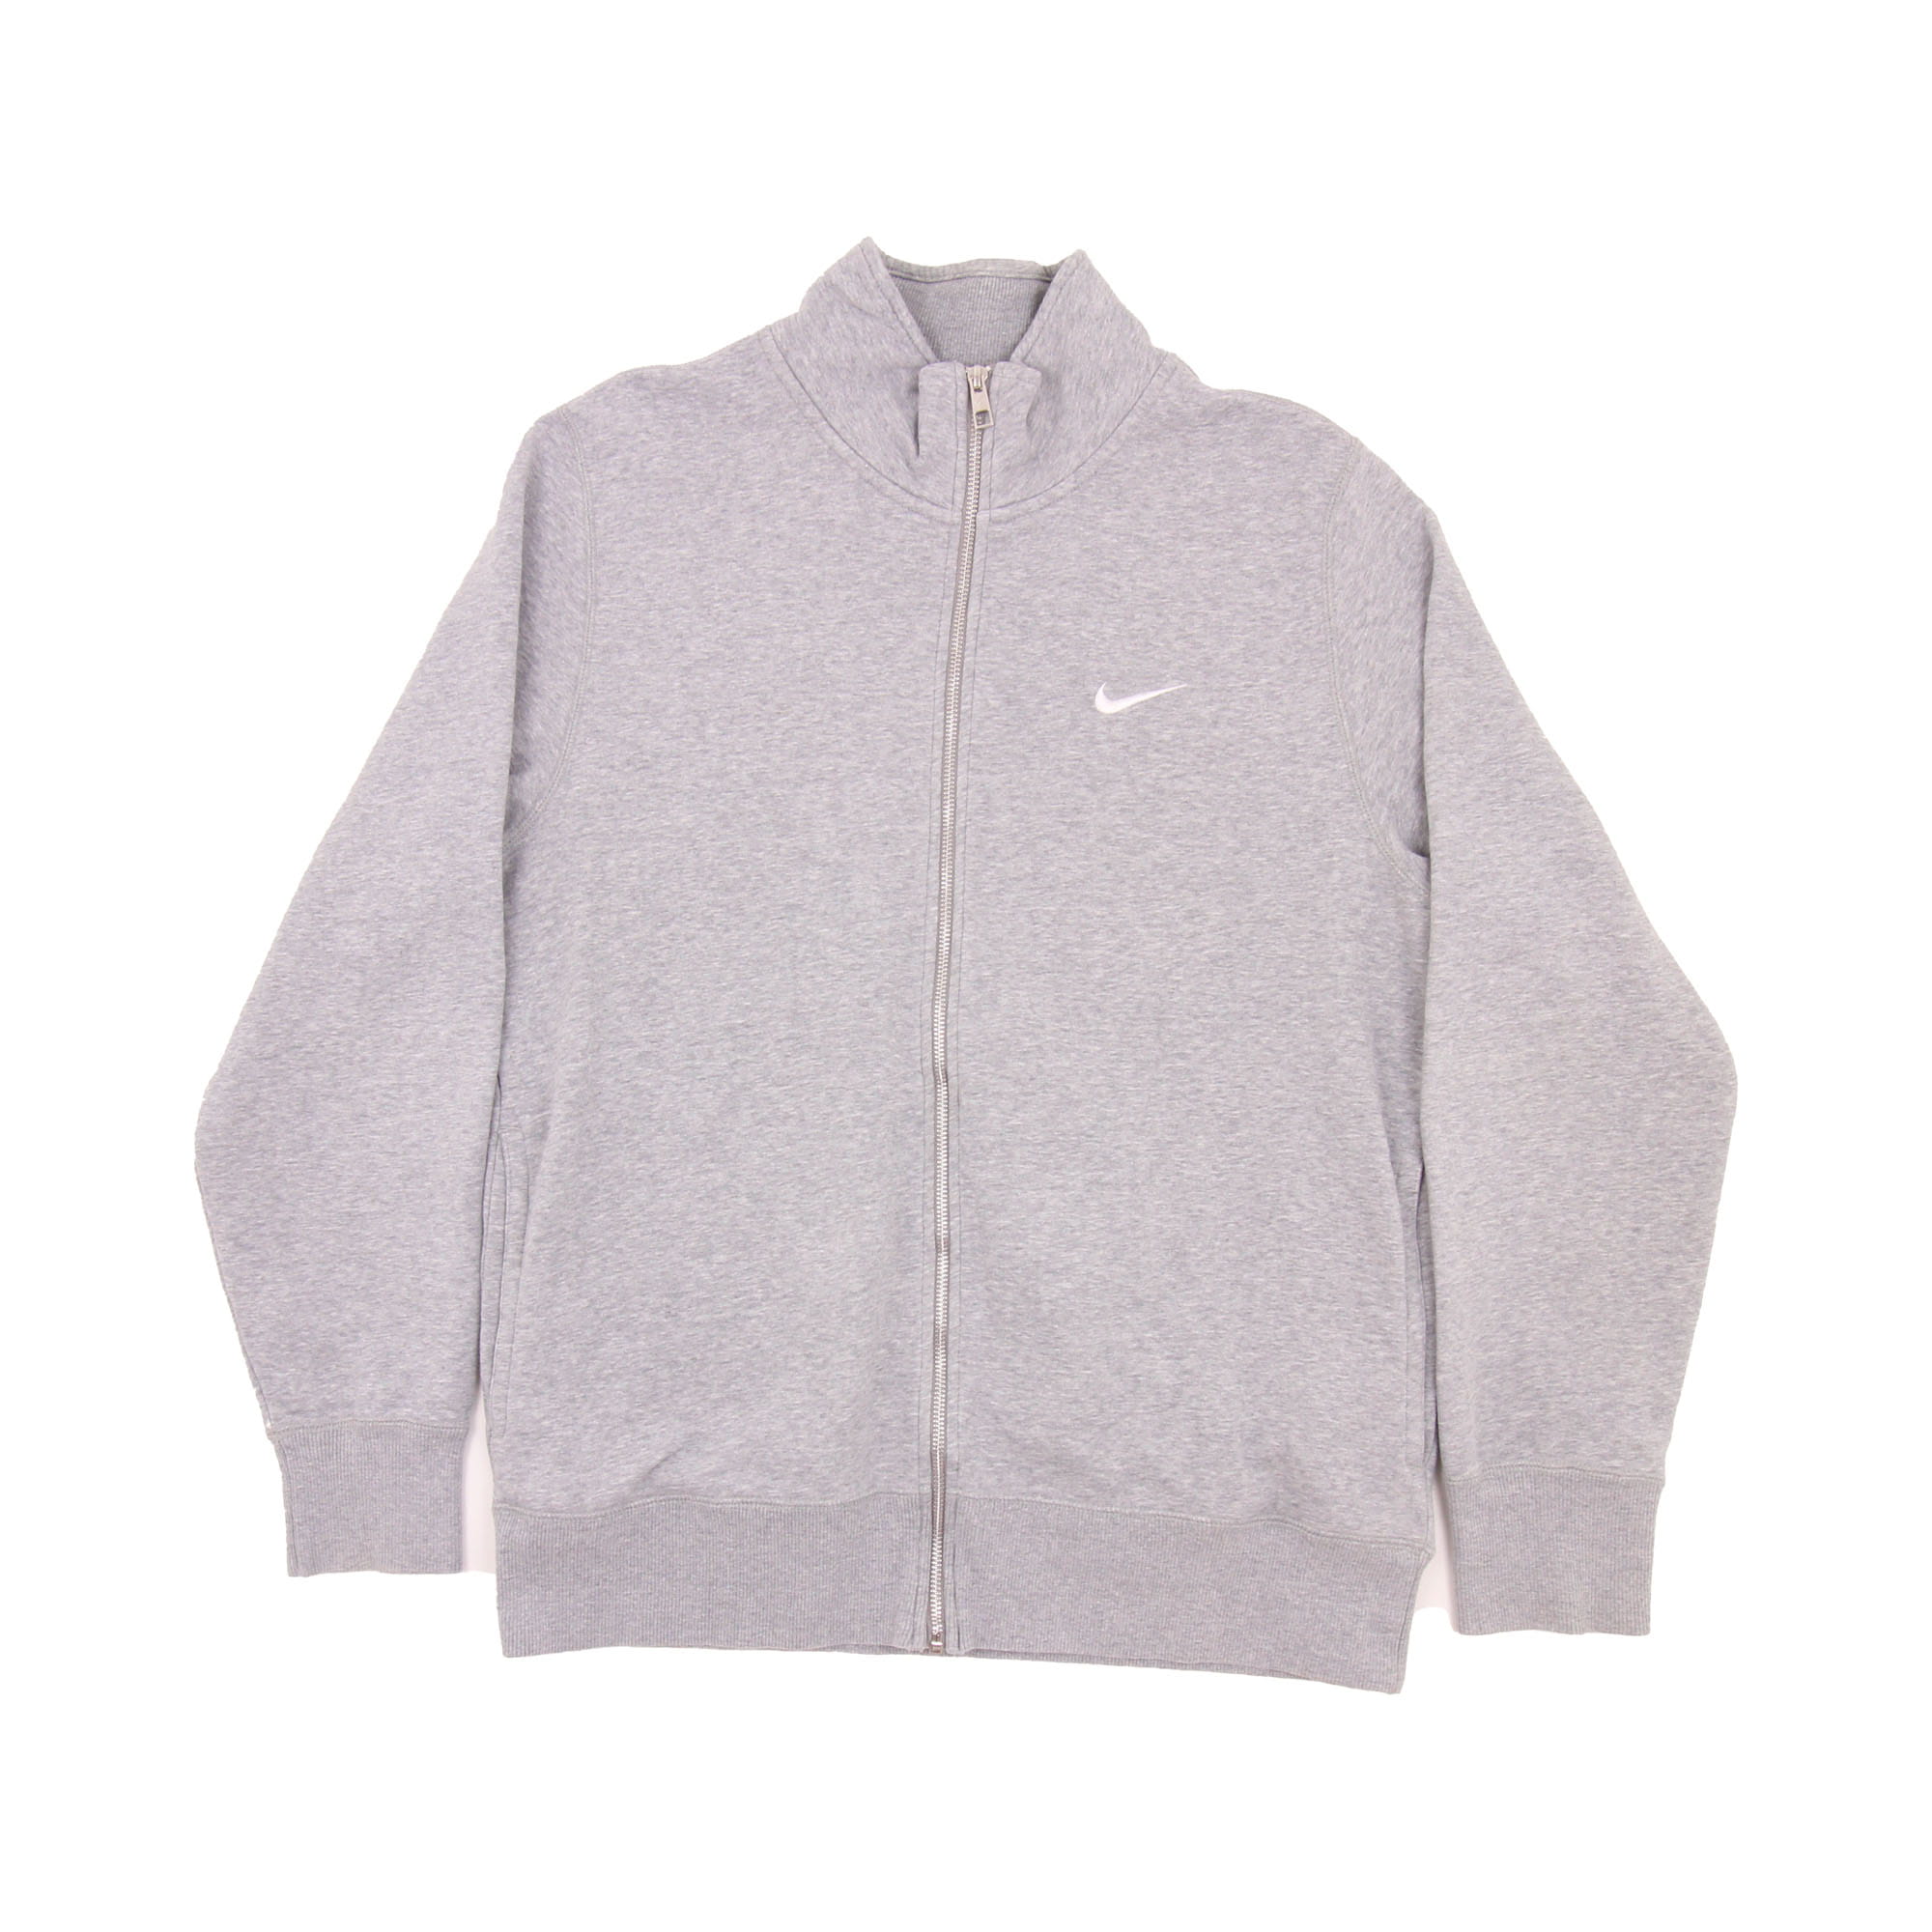 Nike Full Zip Sweatshirt -  L